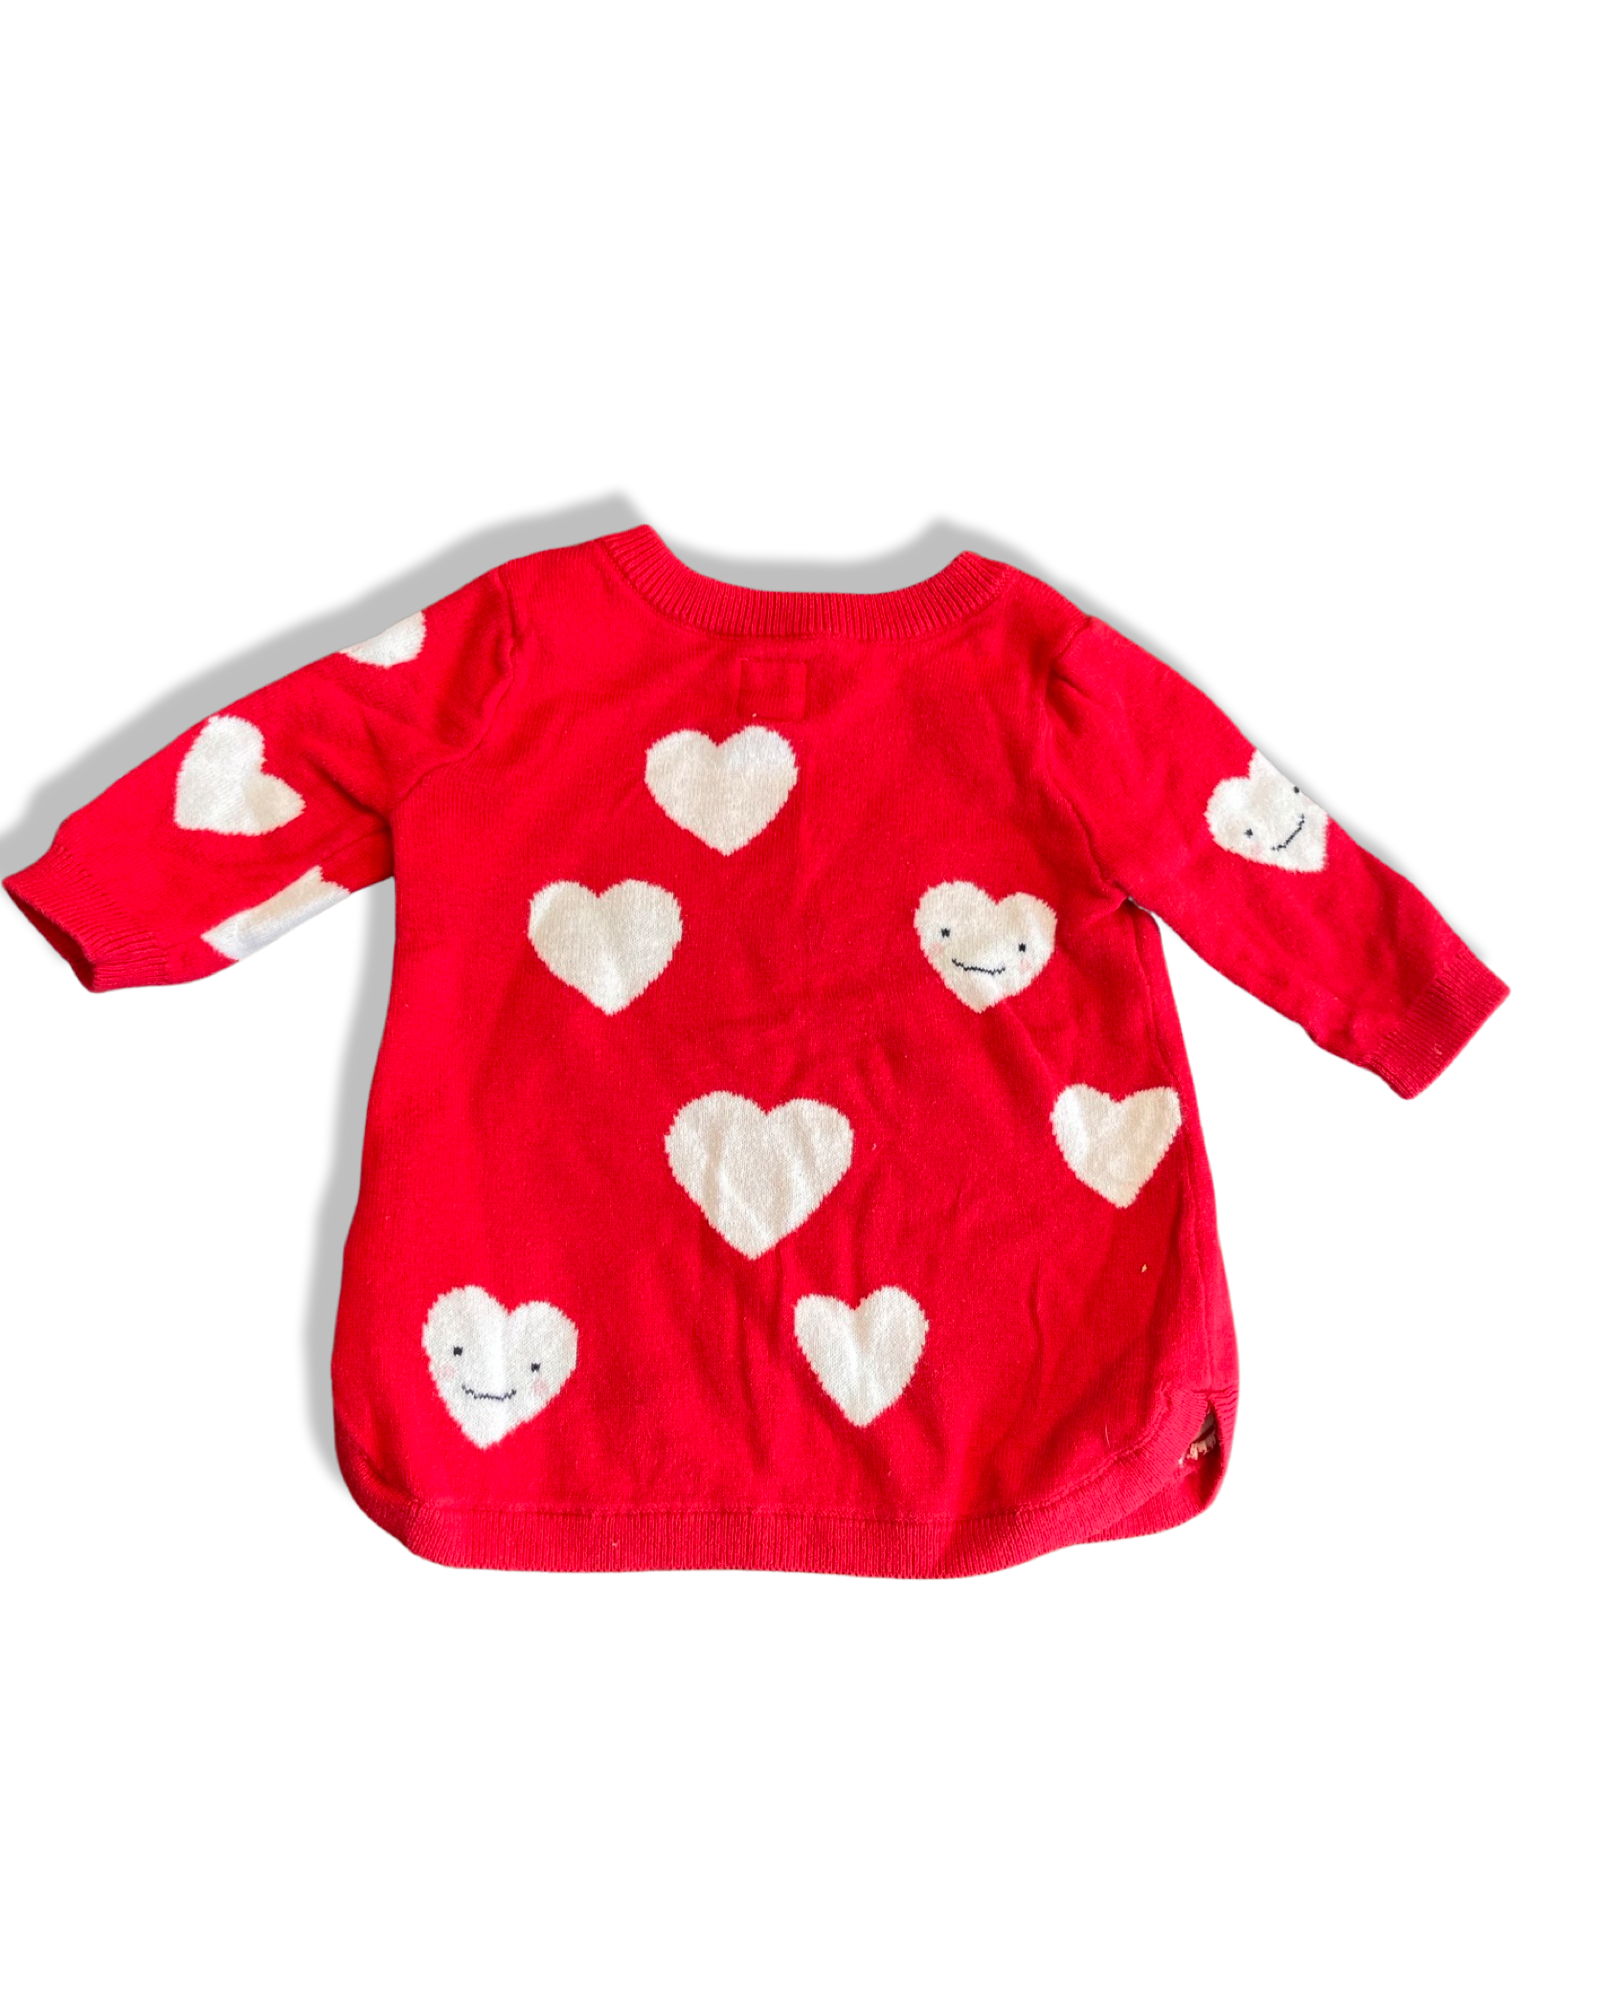 Baby Gap Red Heart Sweater (0-3M)